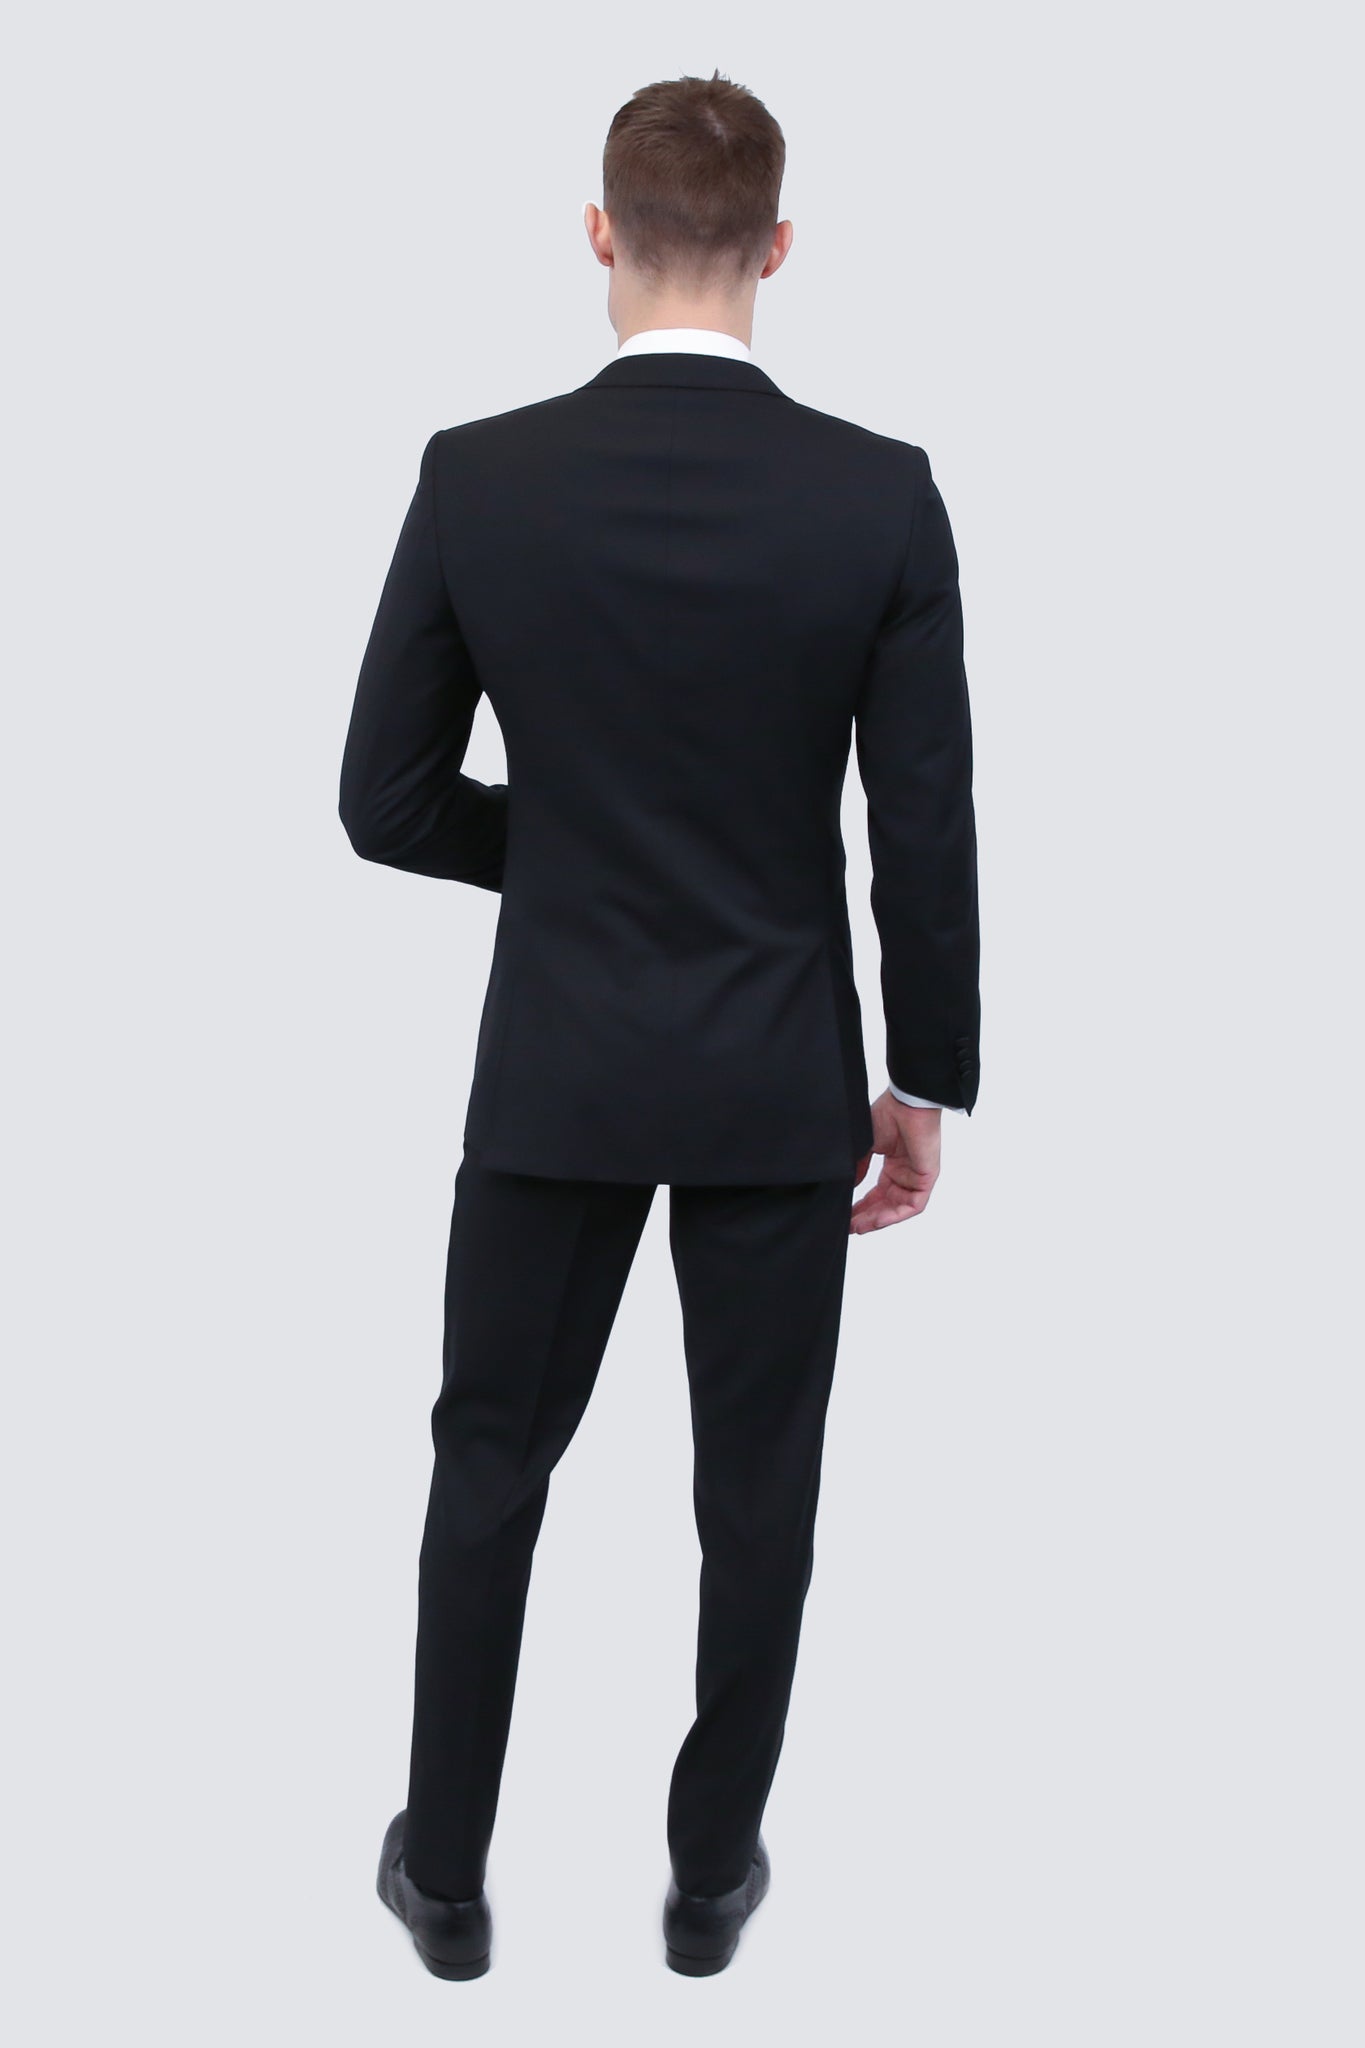 Tailor's Stretch Blend Black Tuxedo | Modern or Slim Fit - My Men's Shop